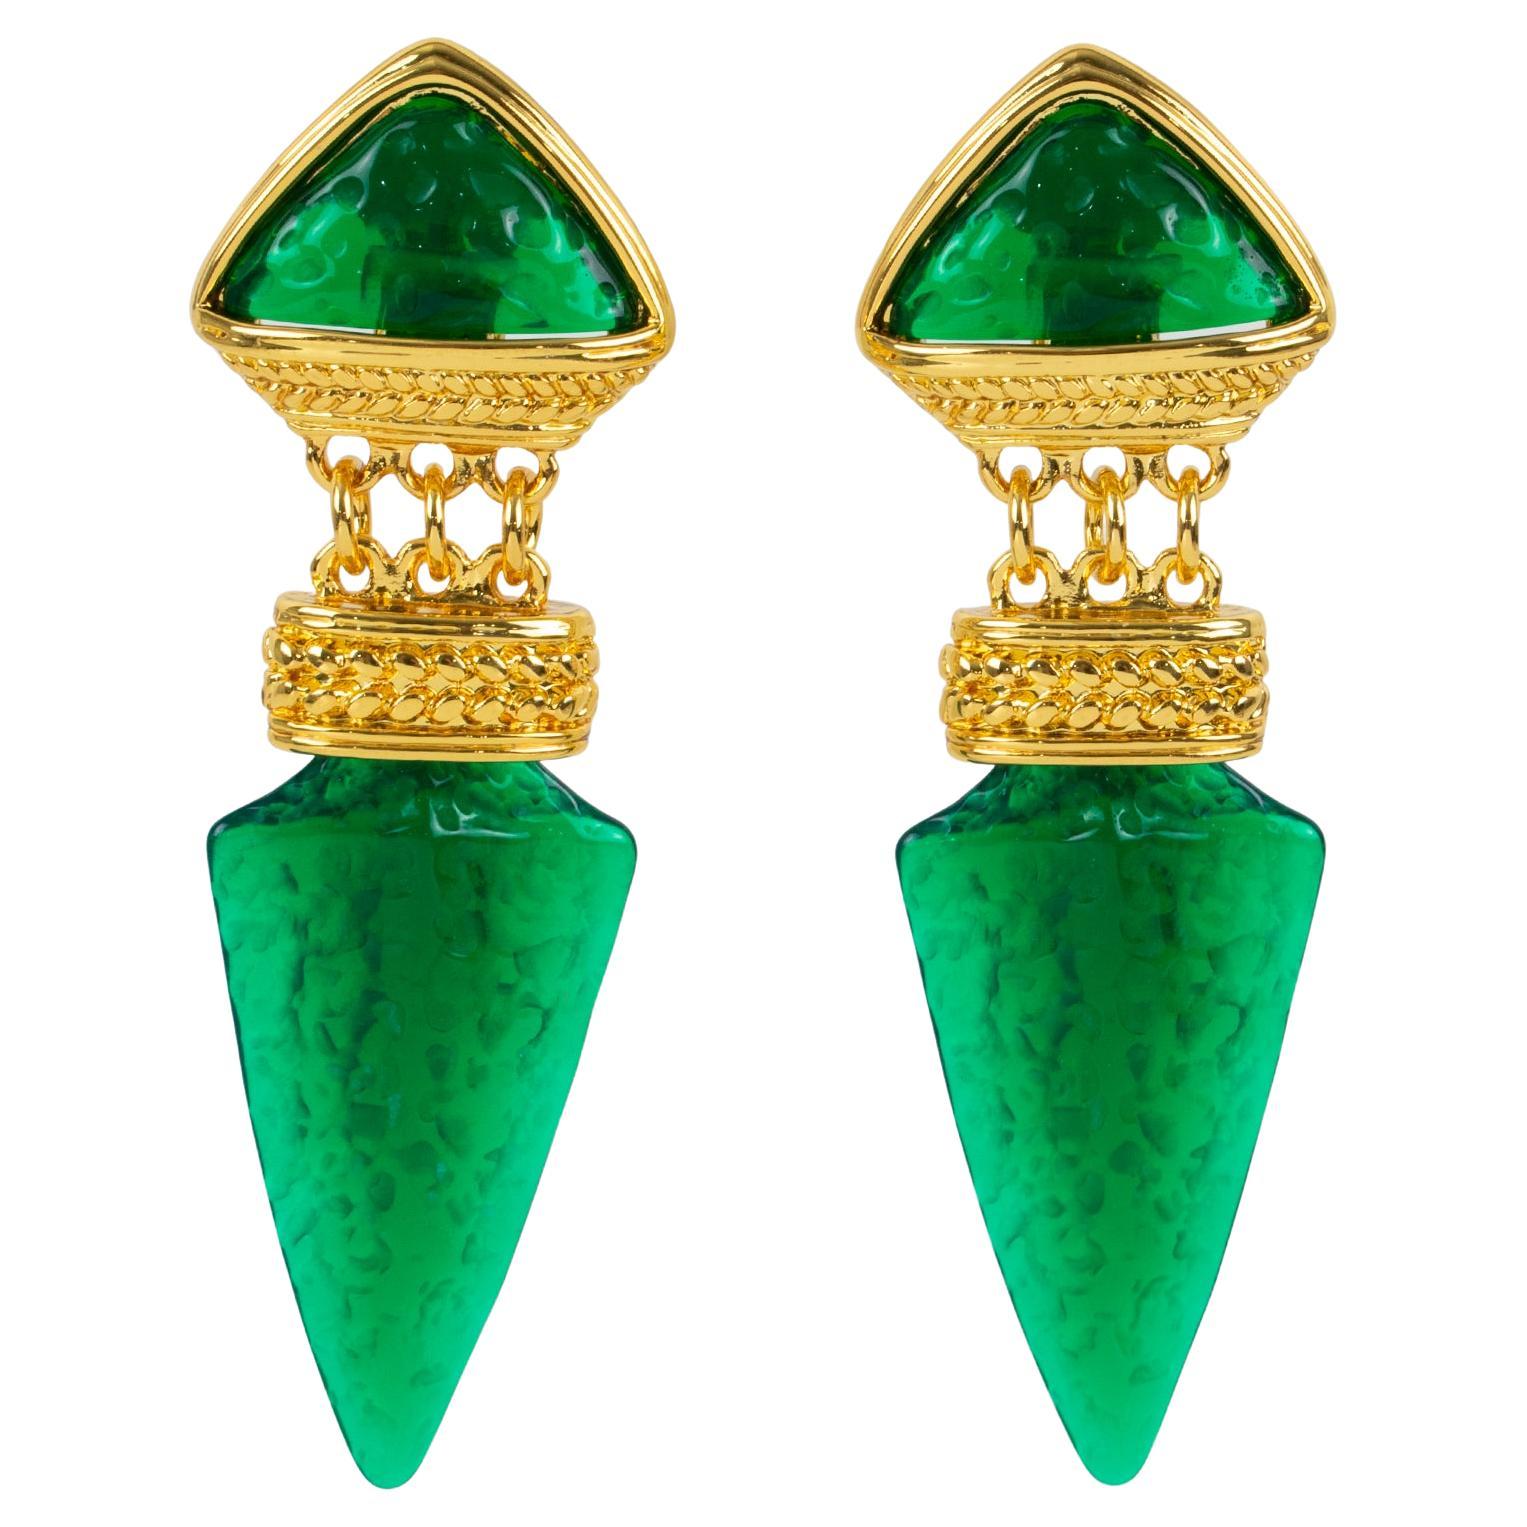 Guy Laroche Dangle Gilt Metal Clip Earrings with Emerald Green Resin